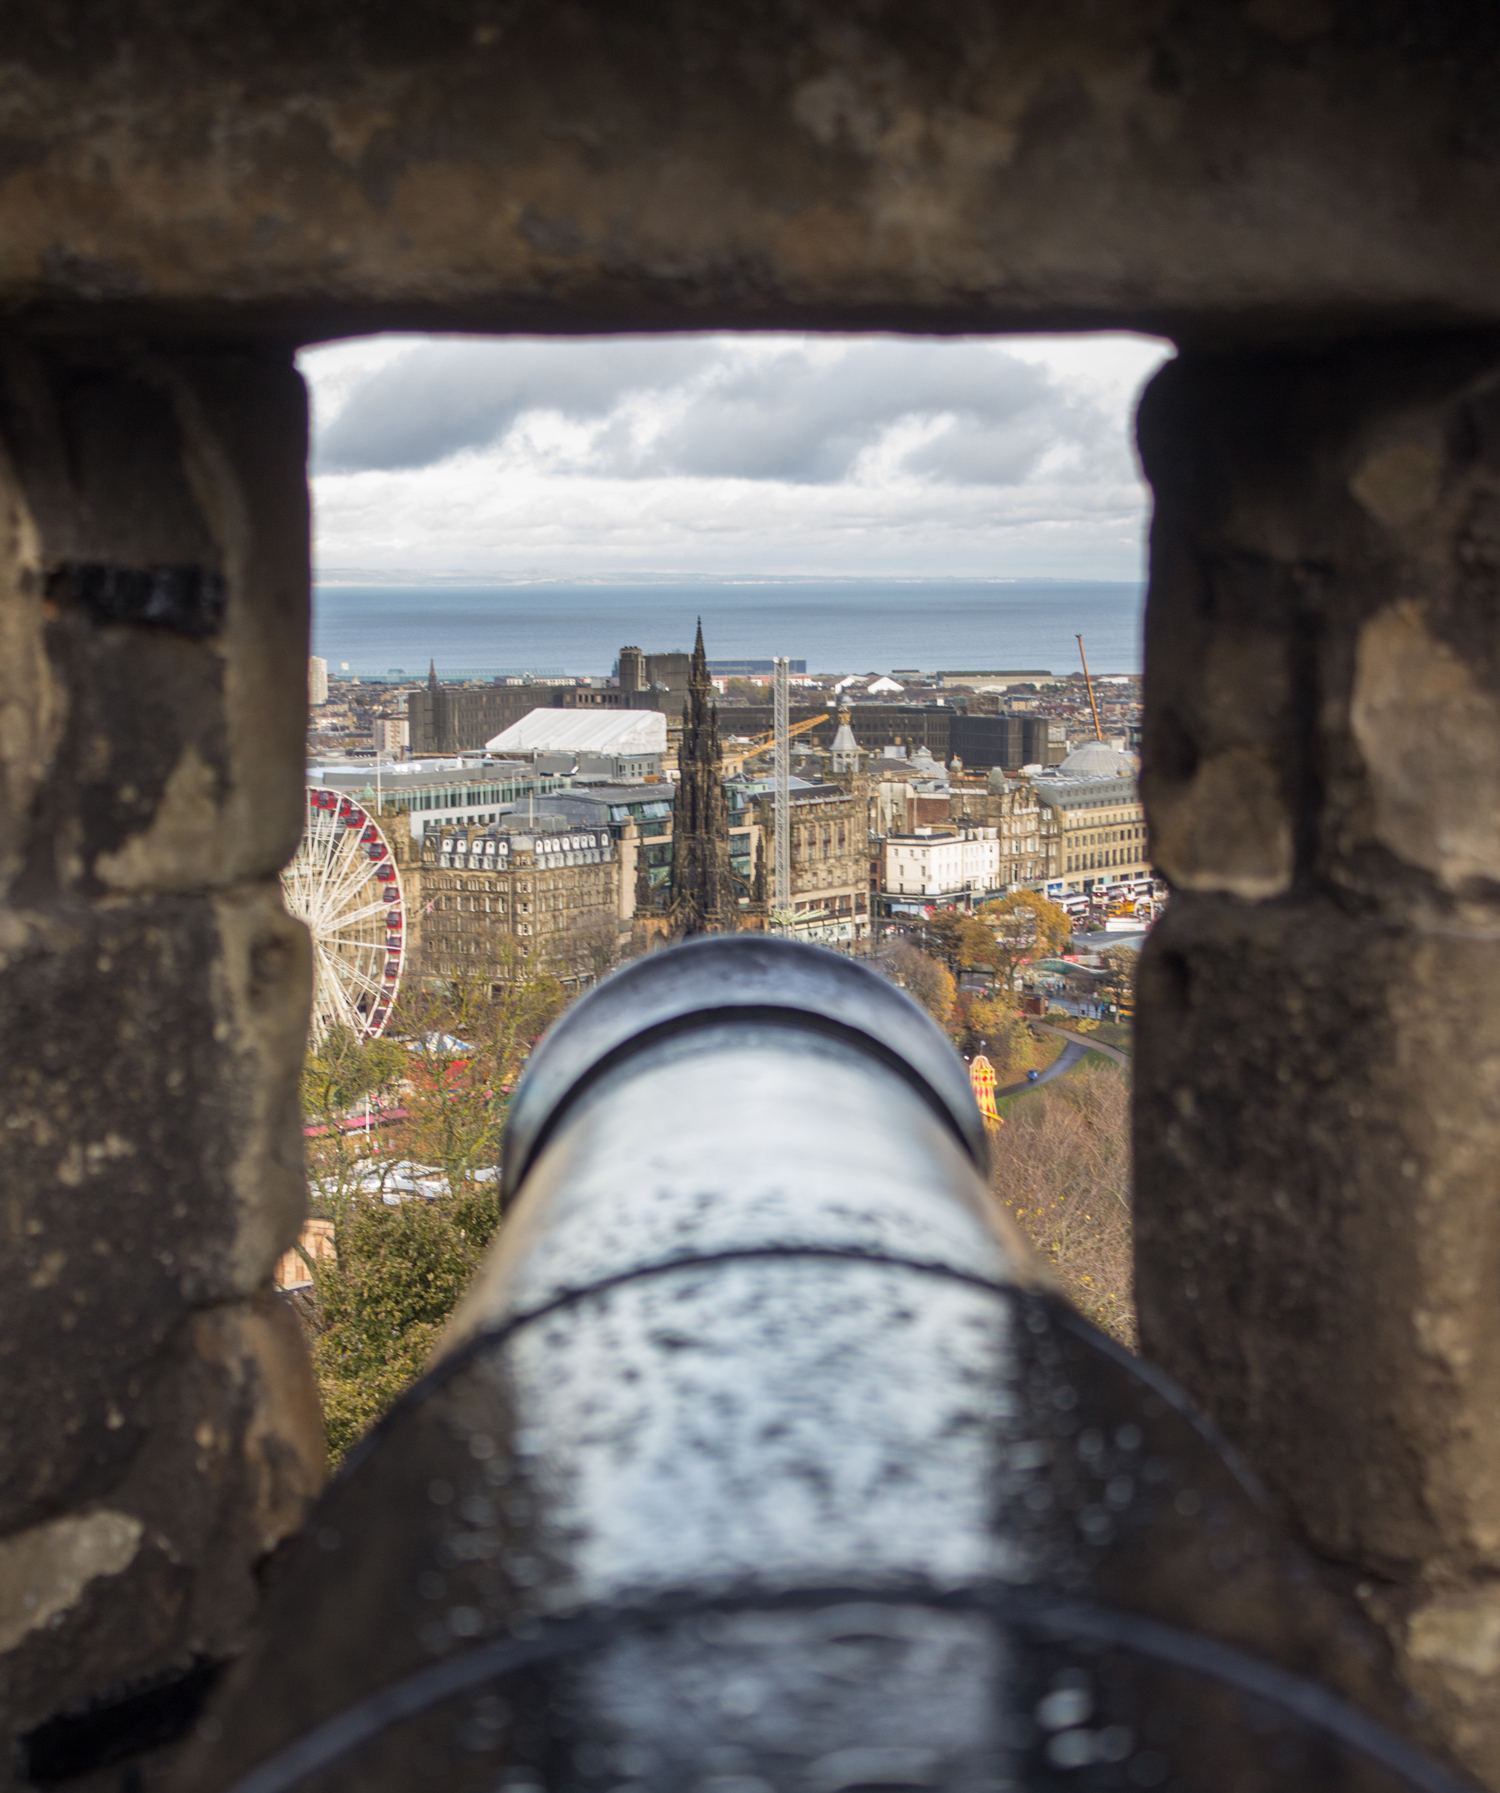 View of Edinburgh from Edinburgh Castle